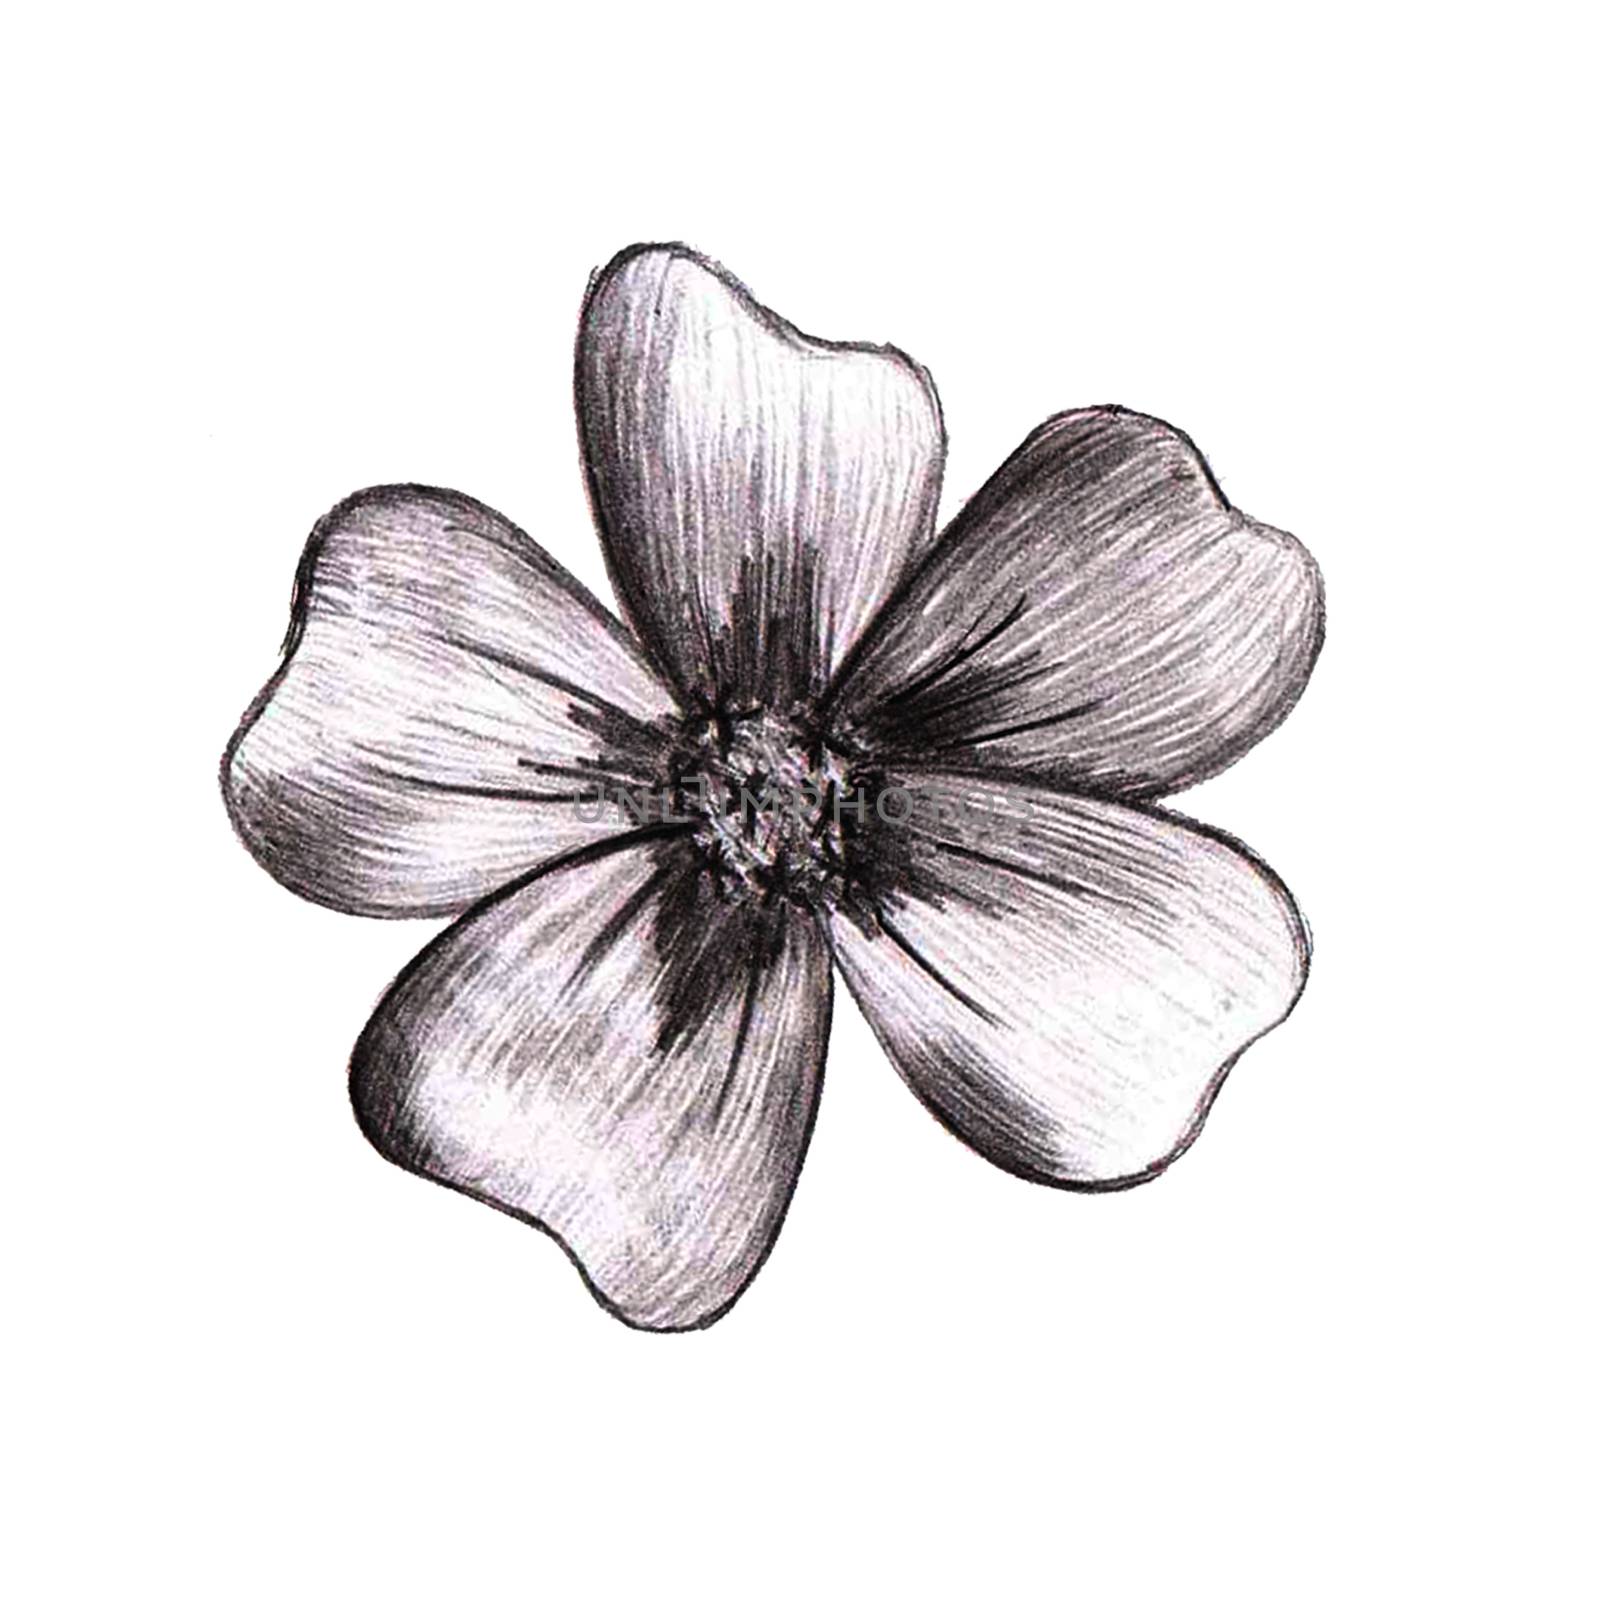 Black and White Hand-Drawn Flower. Thin-leaved Marigolds Sketch. by Rina_Dozornaya